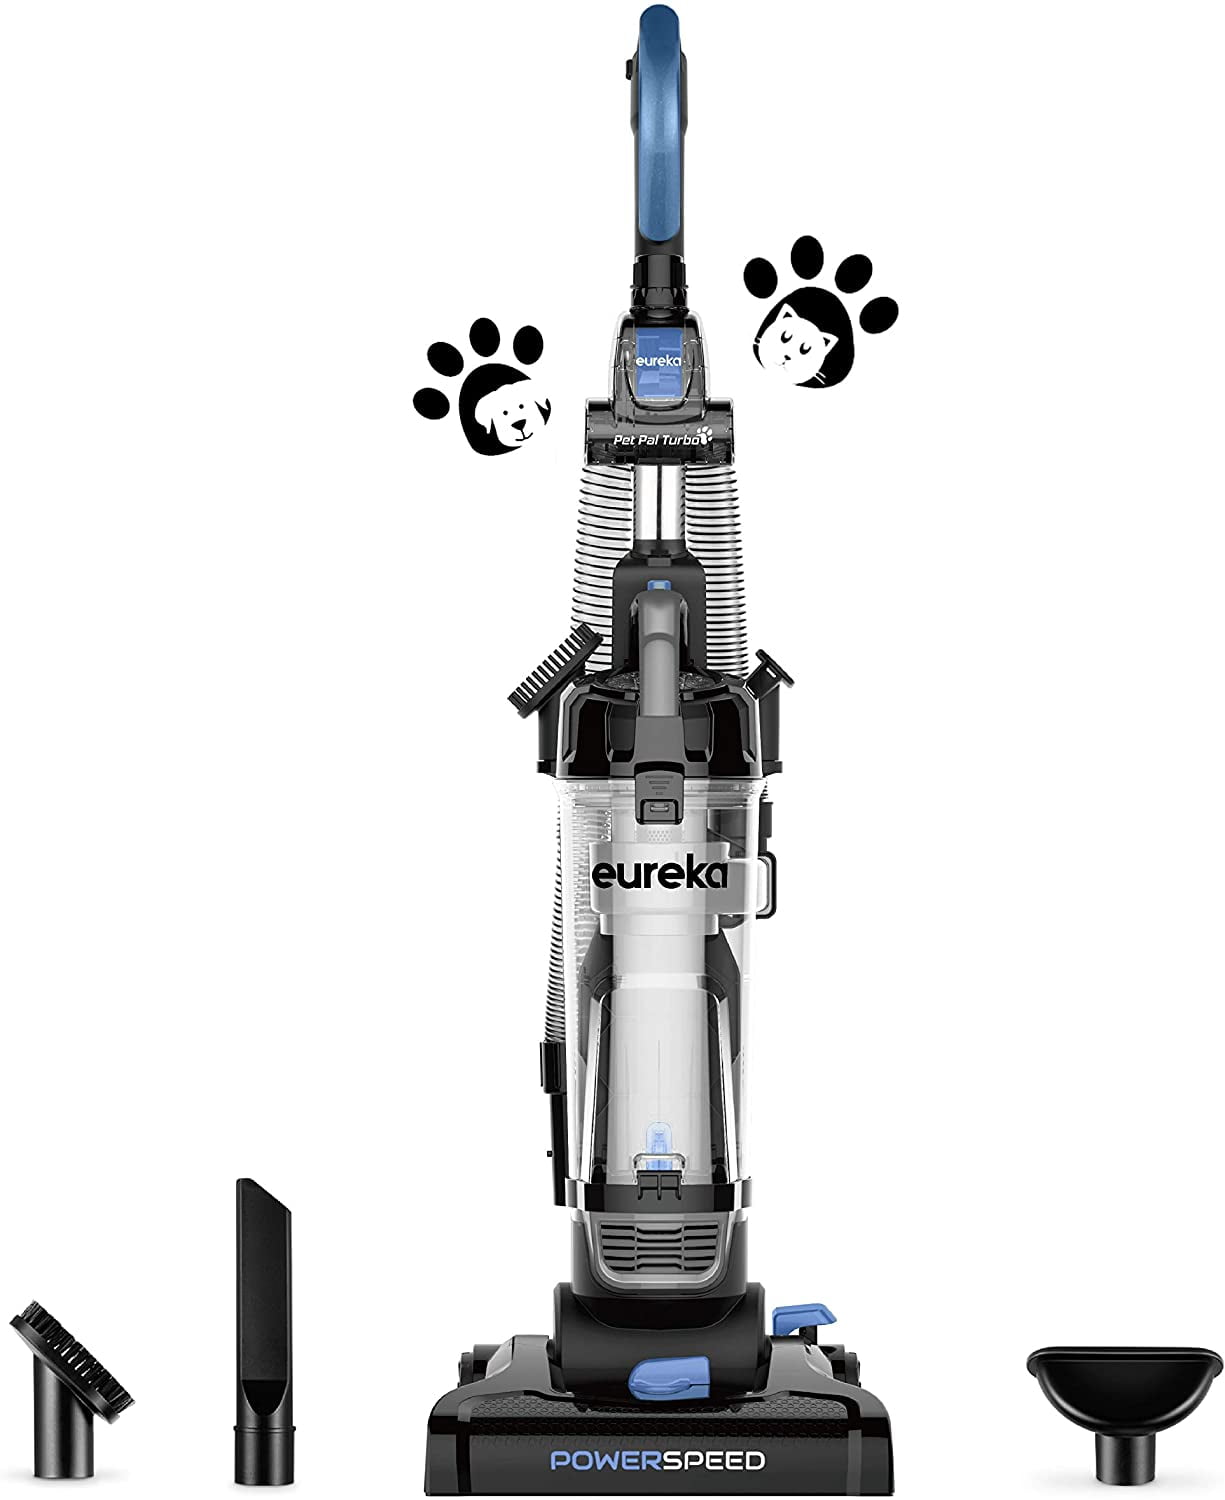 PowerSpeed Bagless Upright Vacuum Cleaner, Pet Turbo, Black - Walmart.com